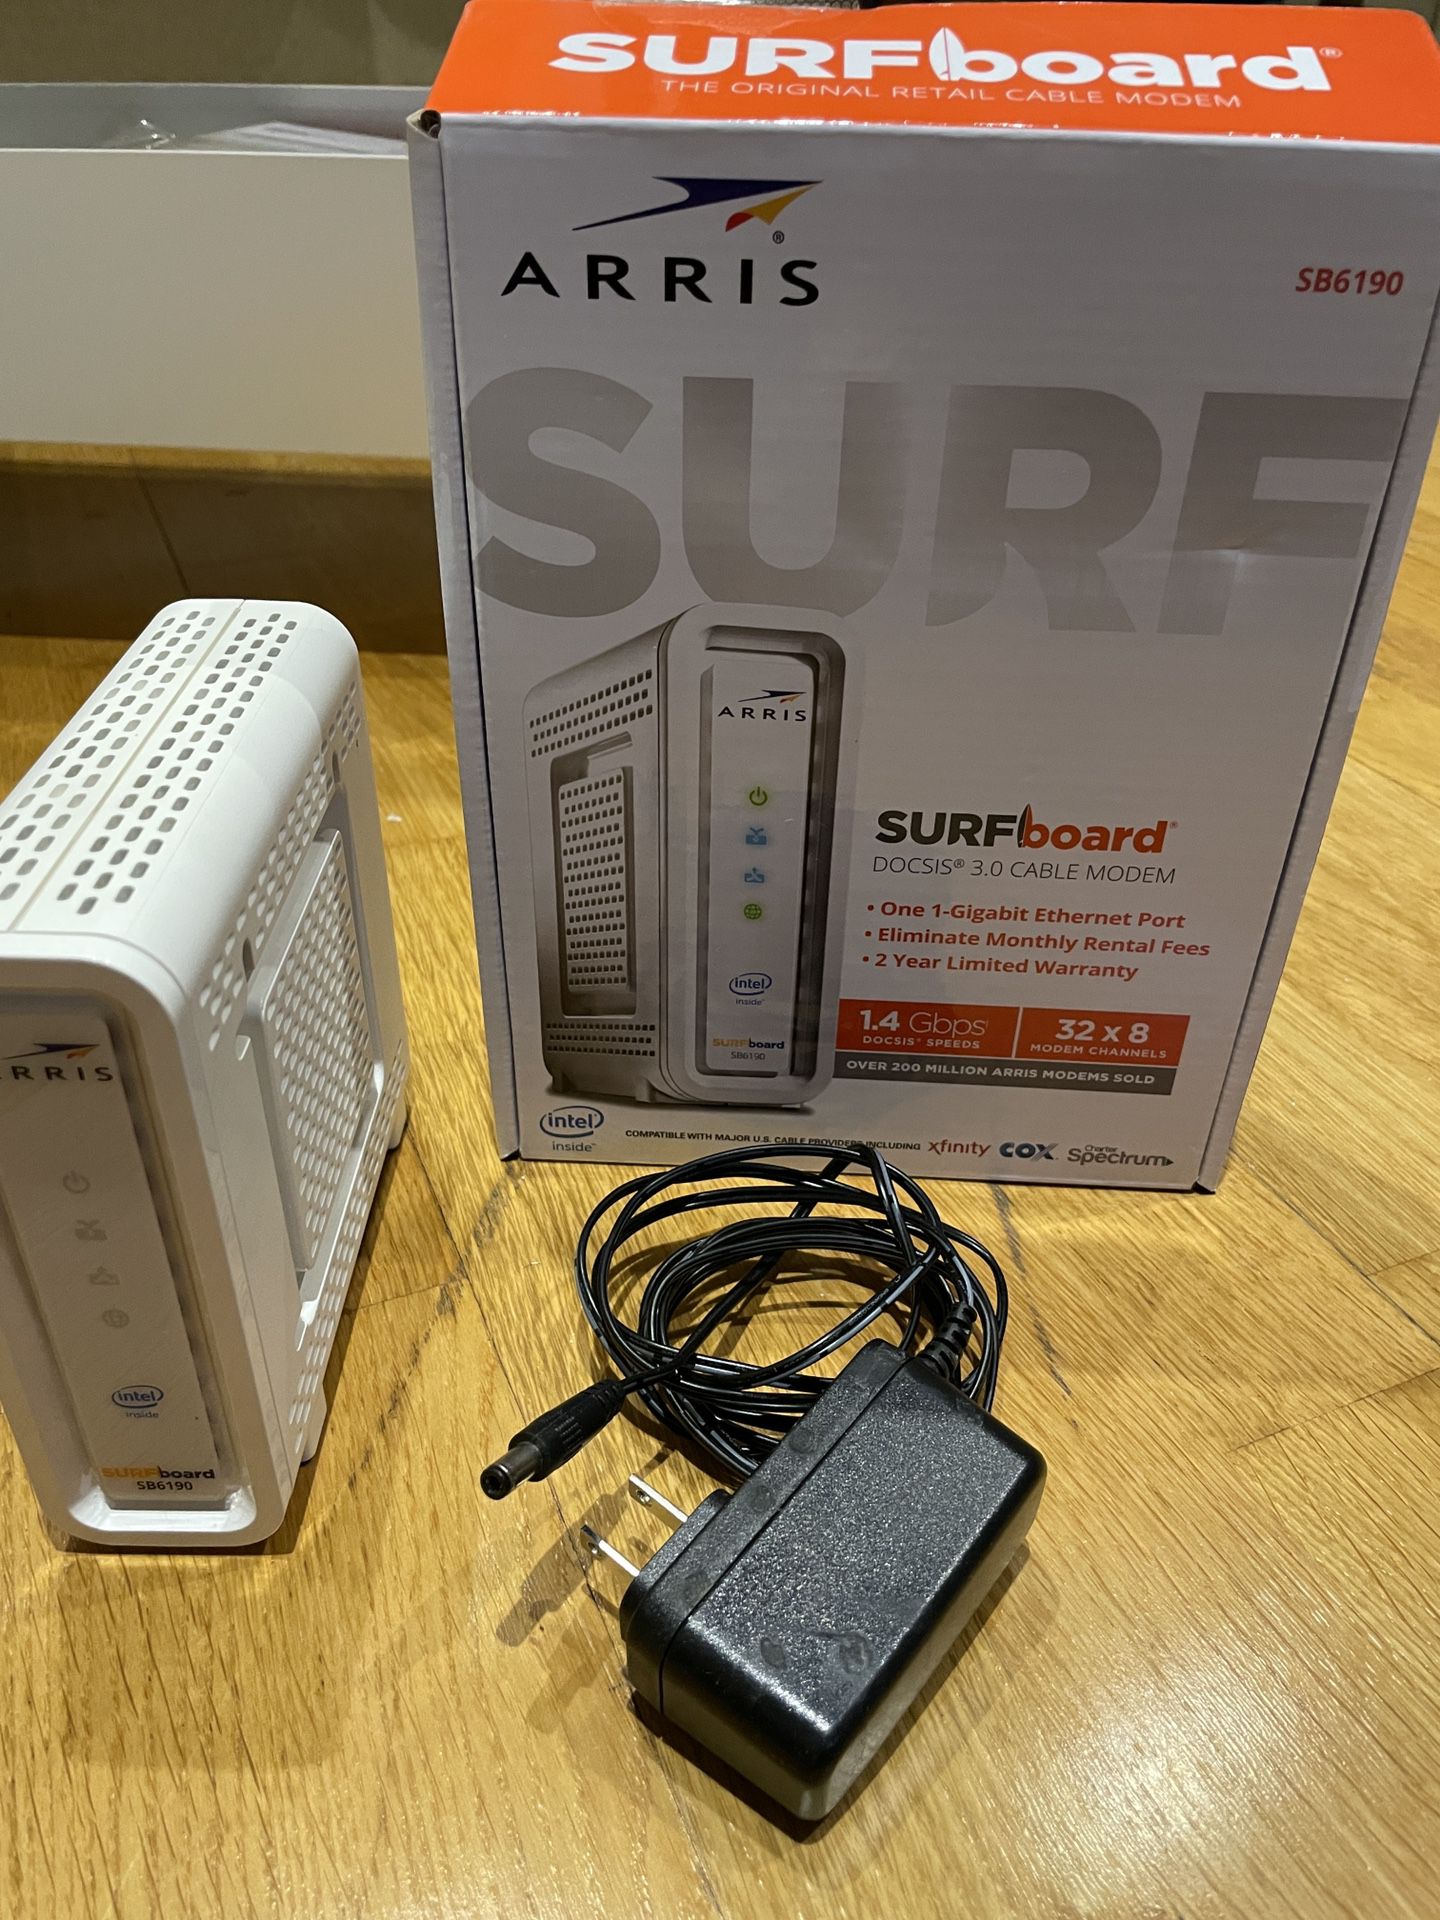 Arris Cable Modem - Surfboard SB6190